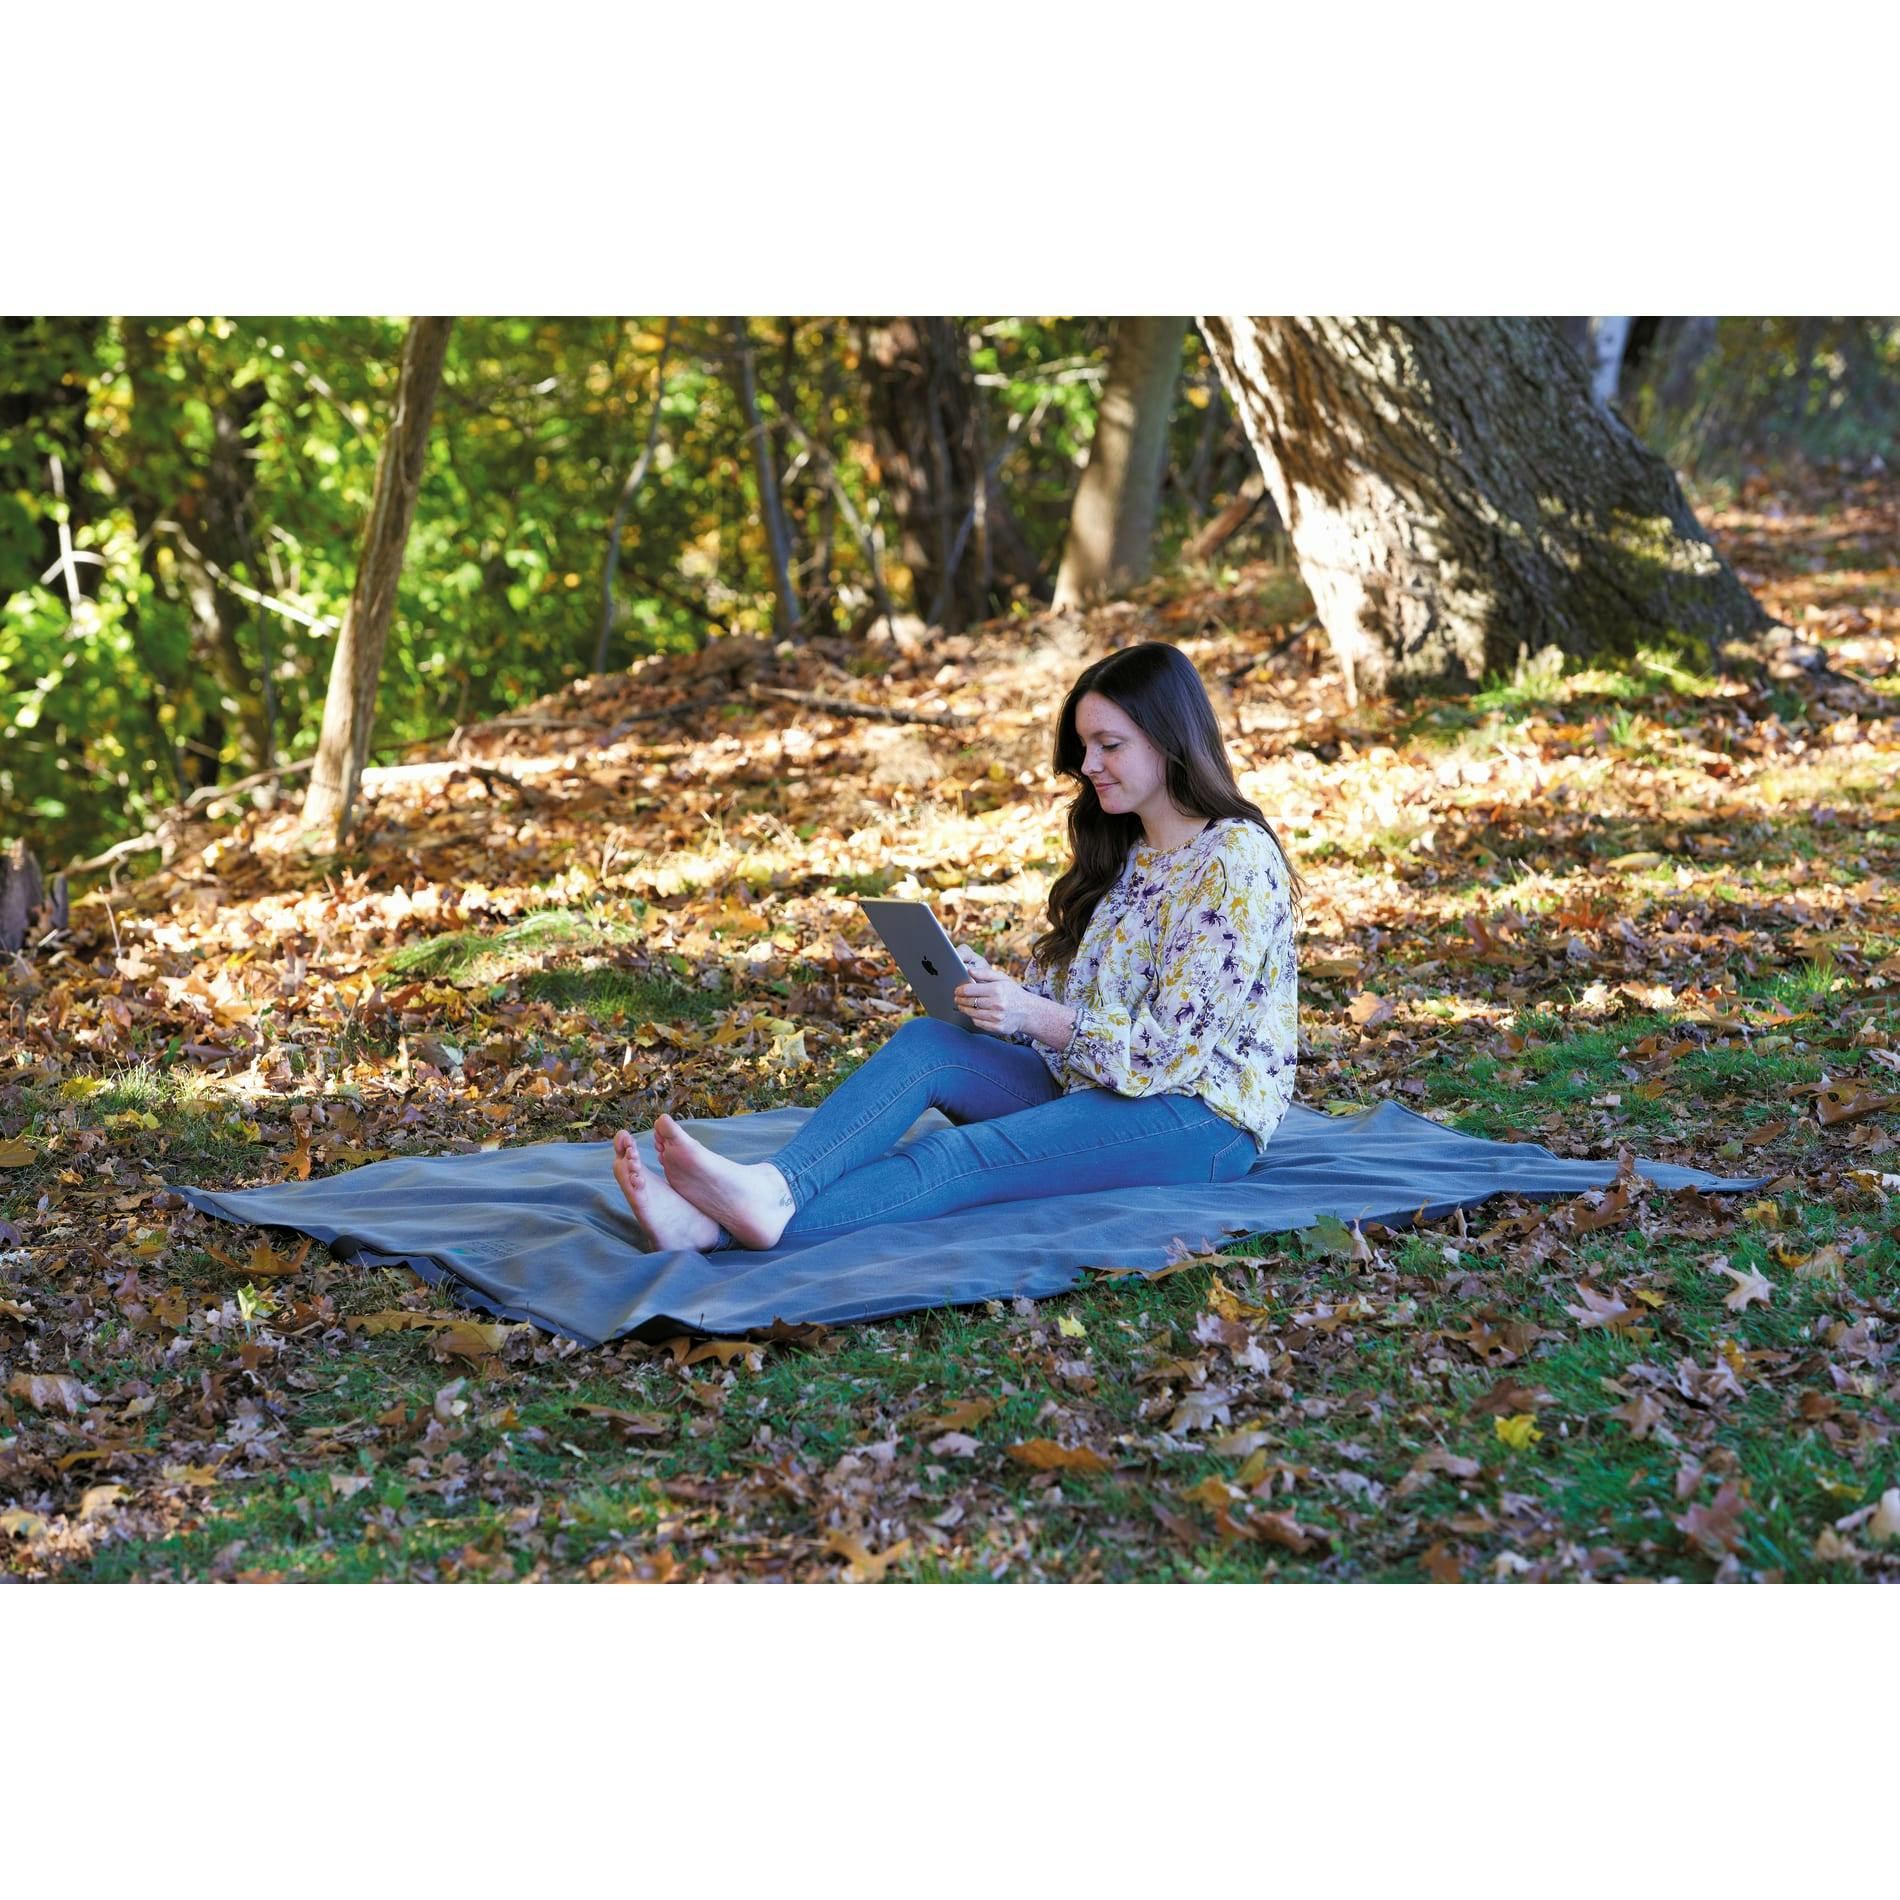 High Sierra® Oversize Picnic Blanket - additional Image 3